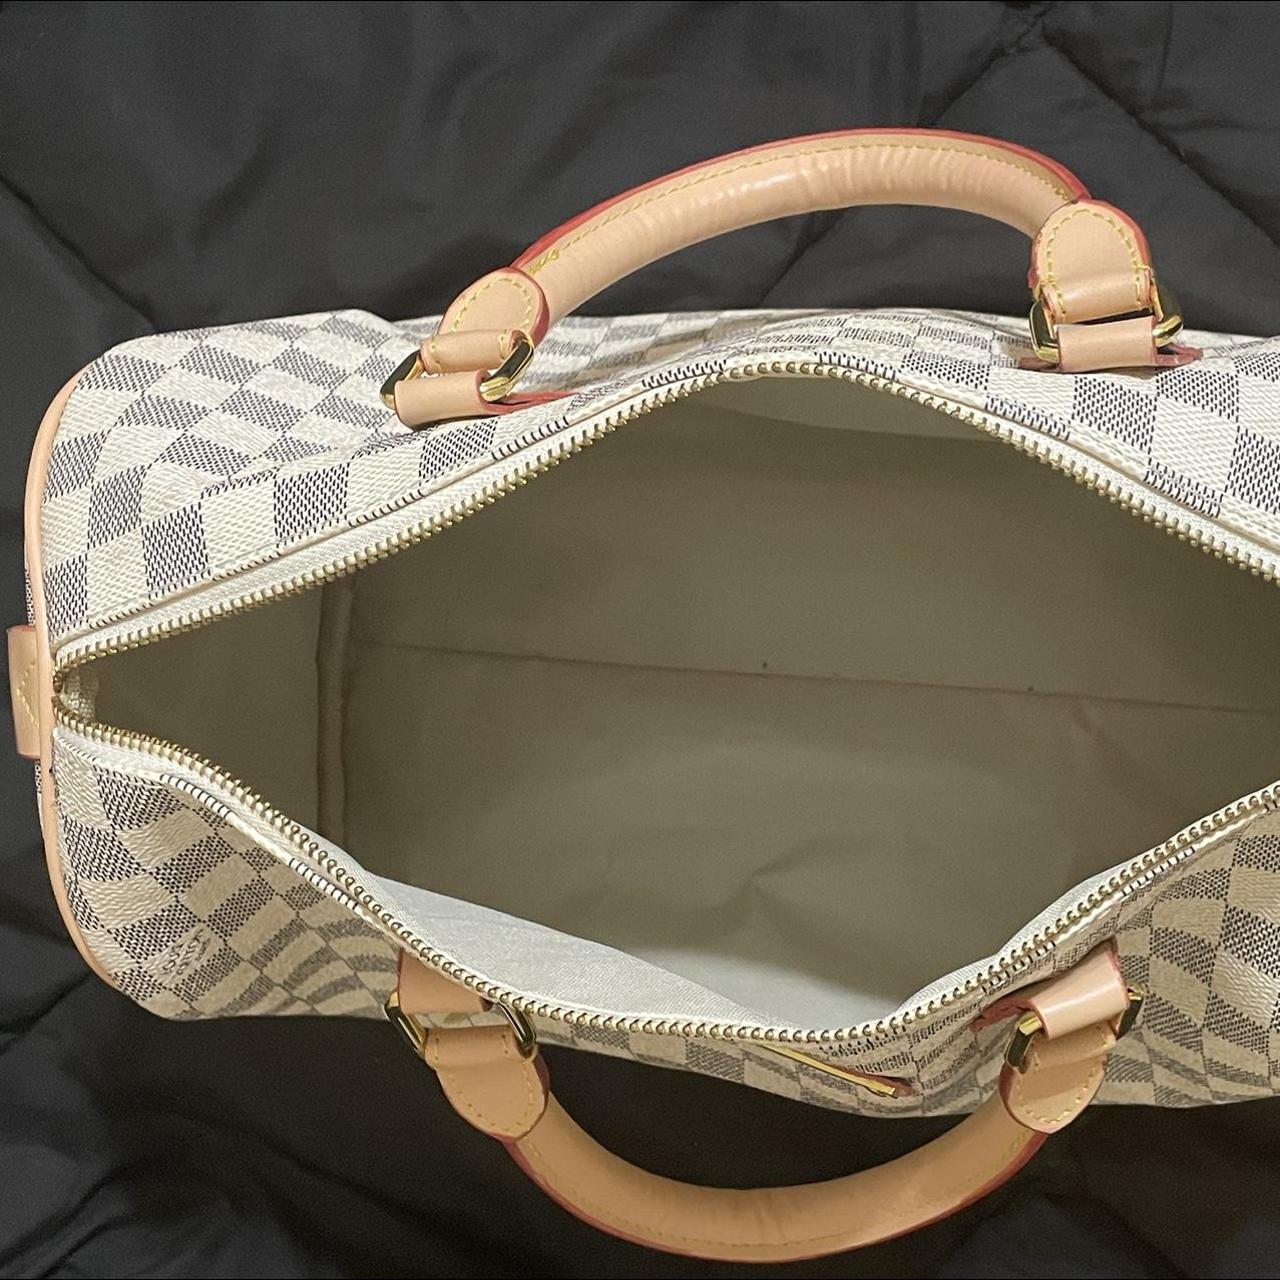 Authentic Louis Vuitton Speedy 30 Damier Azur Handbag - Depop